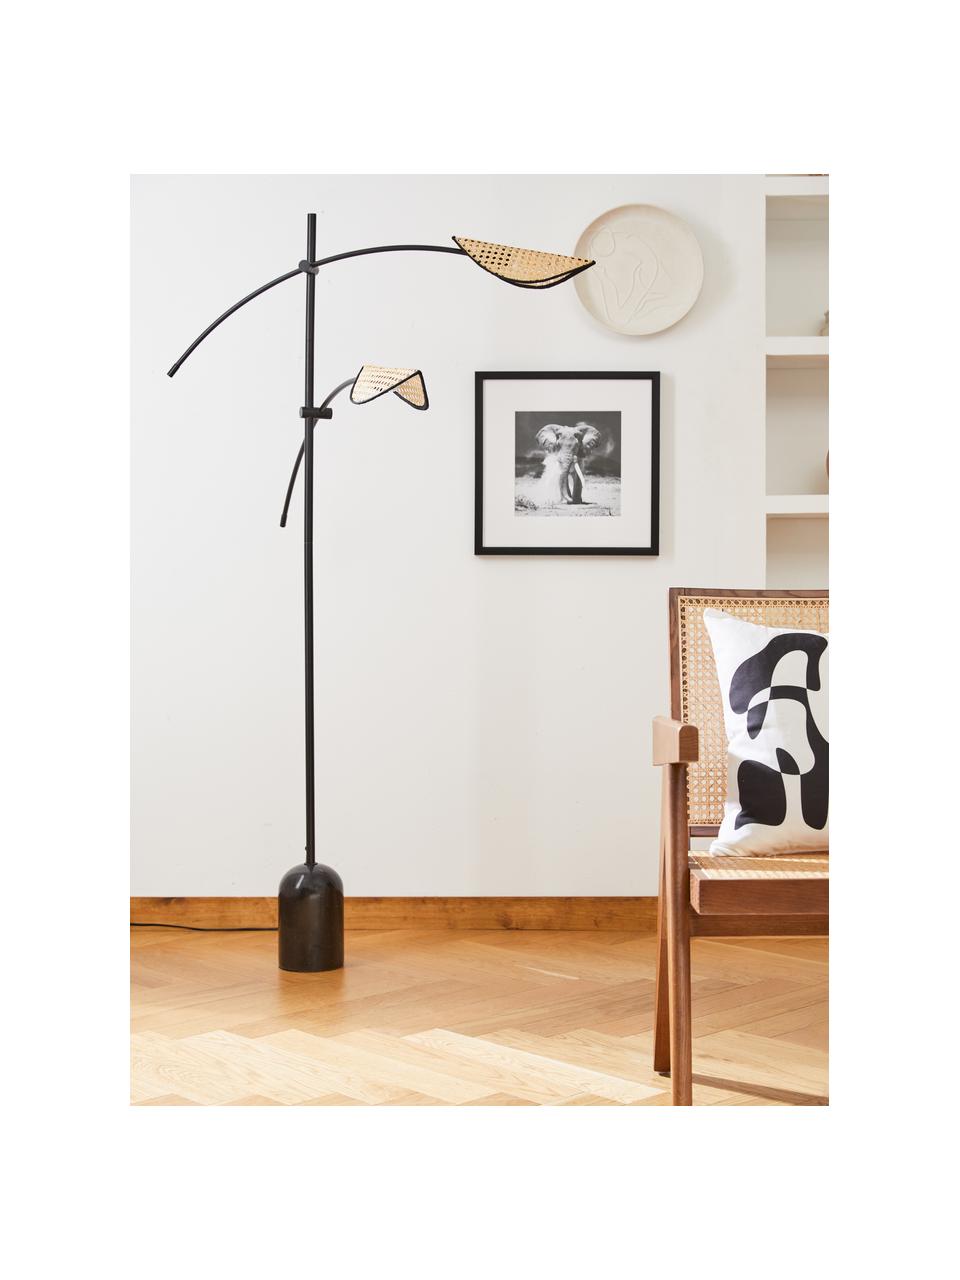 Vloerlamp Freja van Weens vlechtwerk, Zwart, lichtbruin, B 100 x H 160 cm